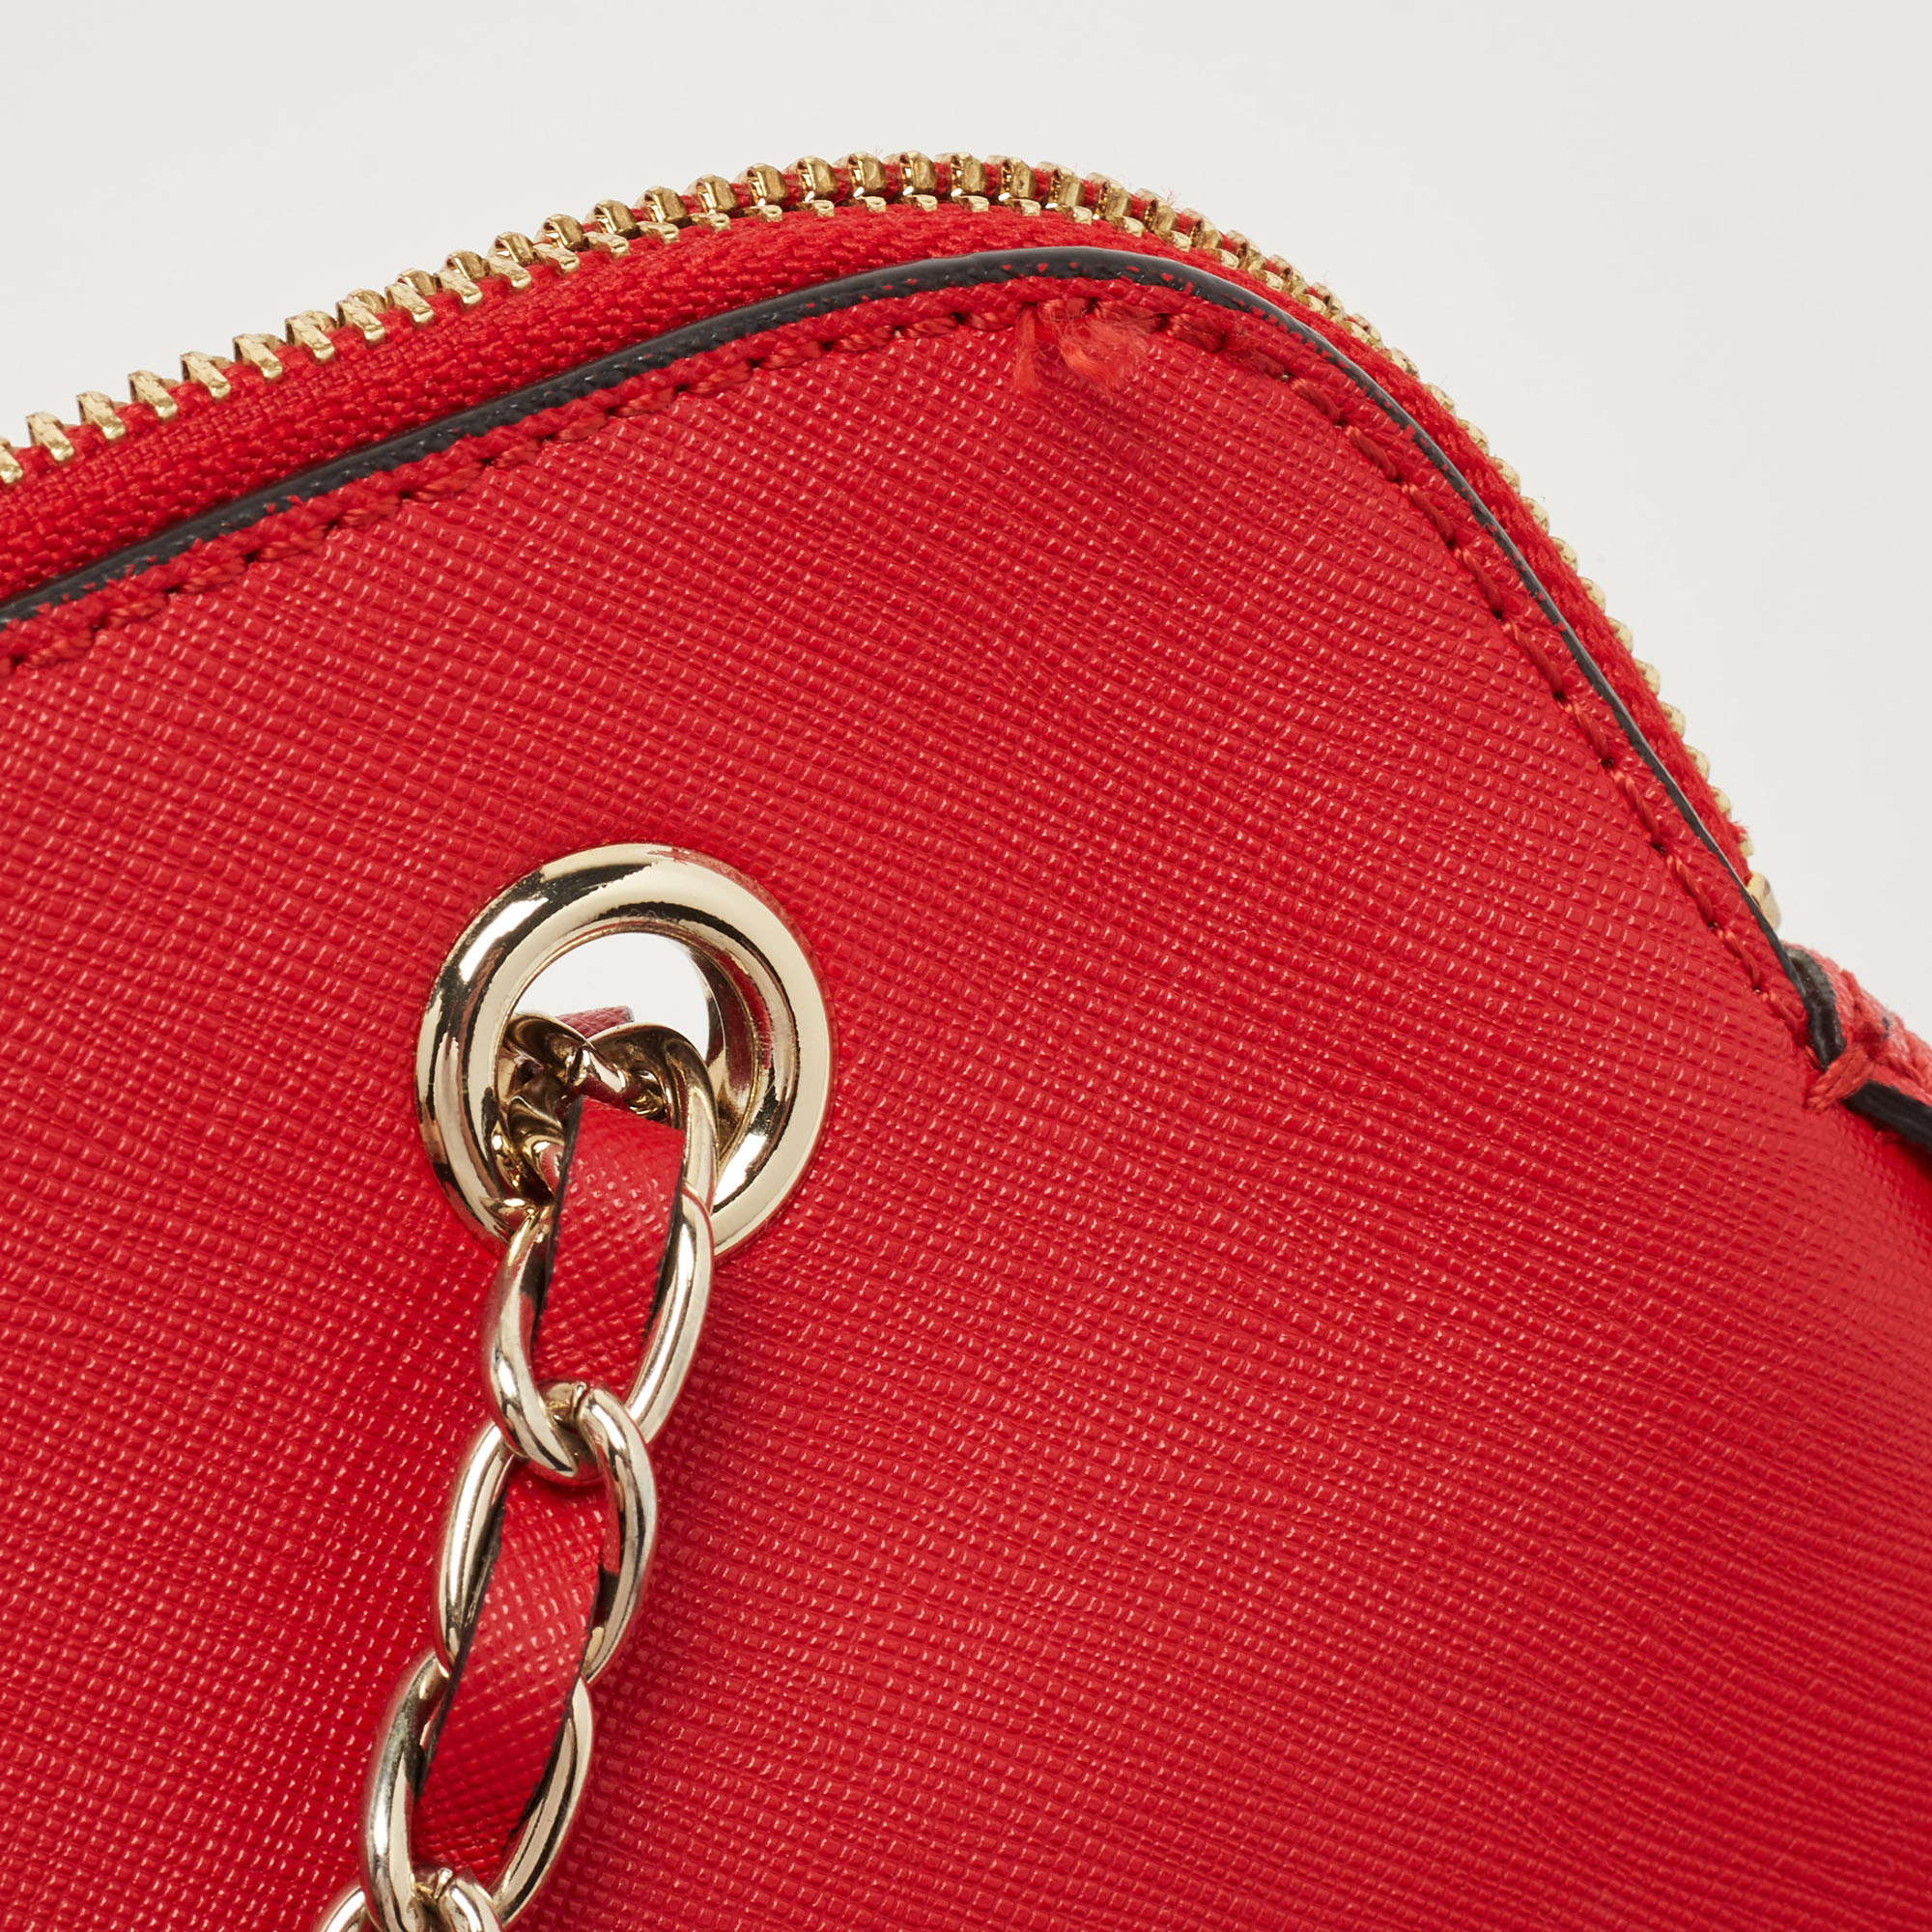 DKNY Red Saffiano Leather Bryant Park Shoulder Bag